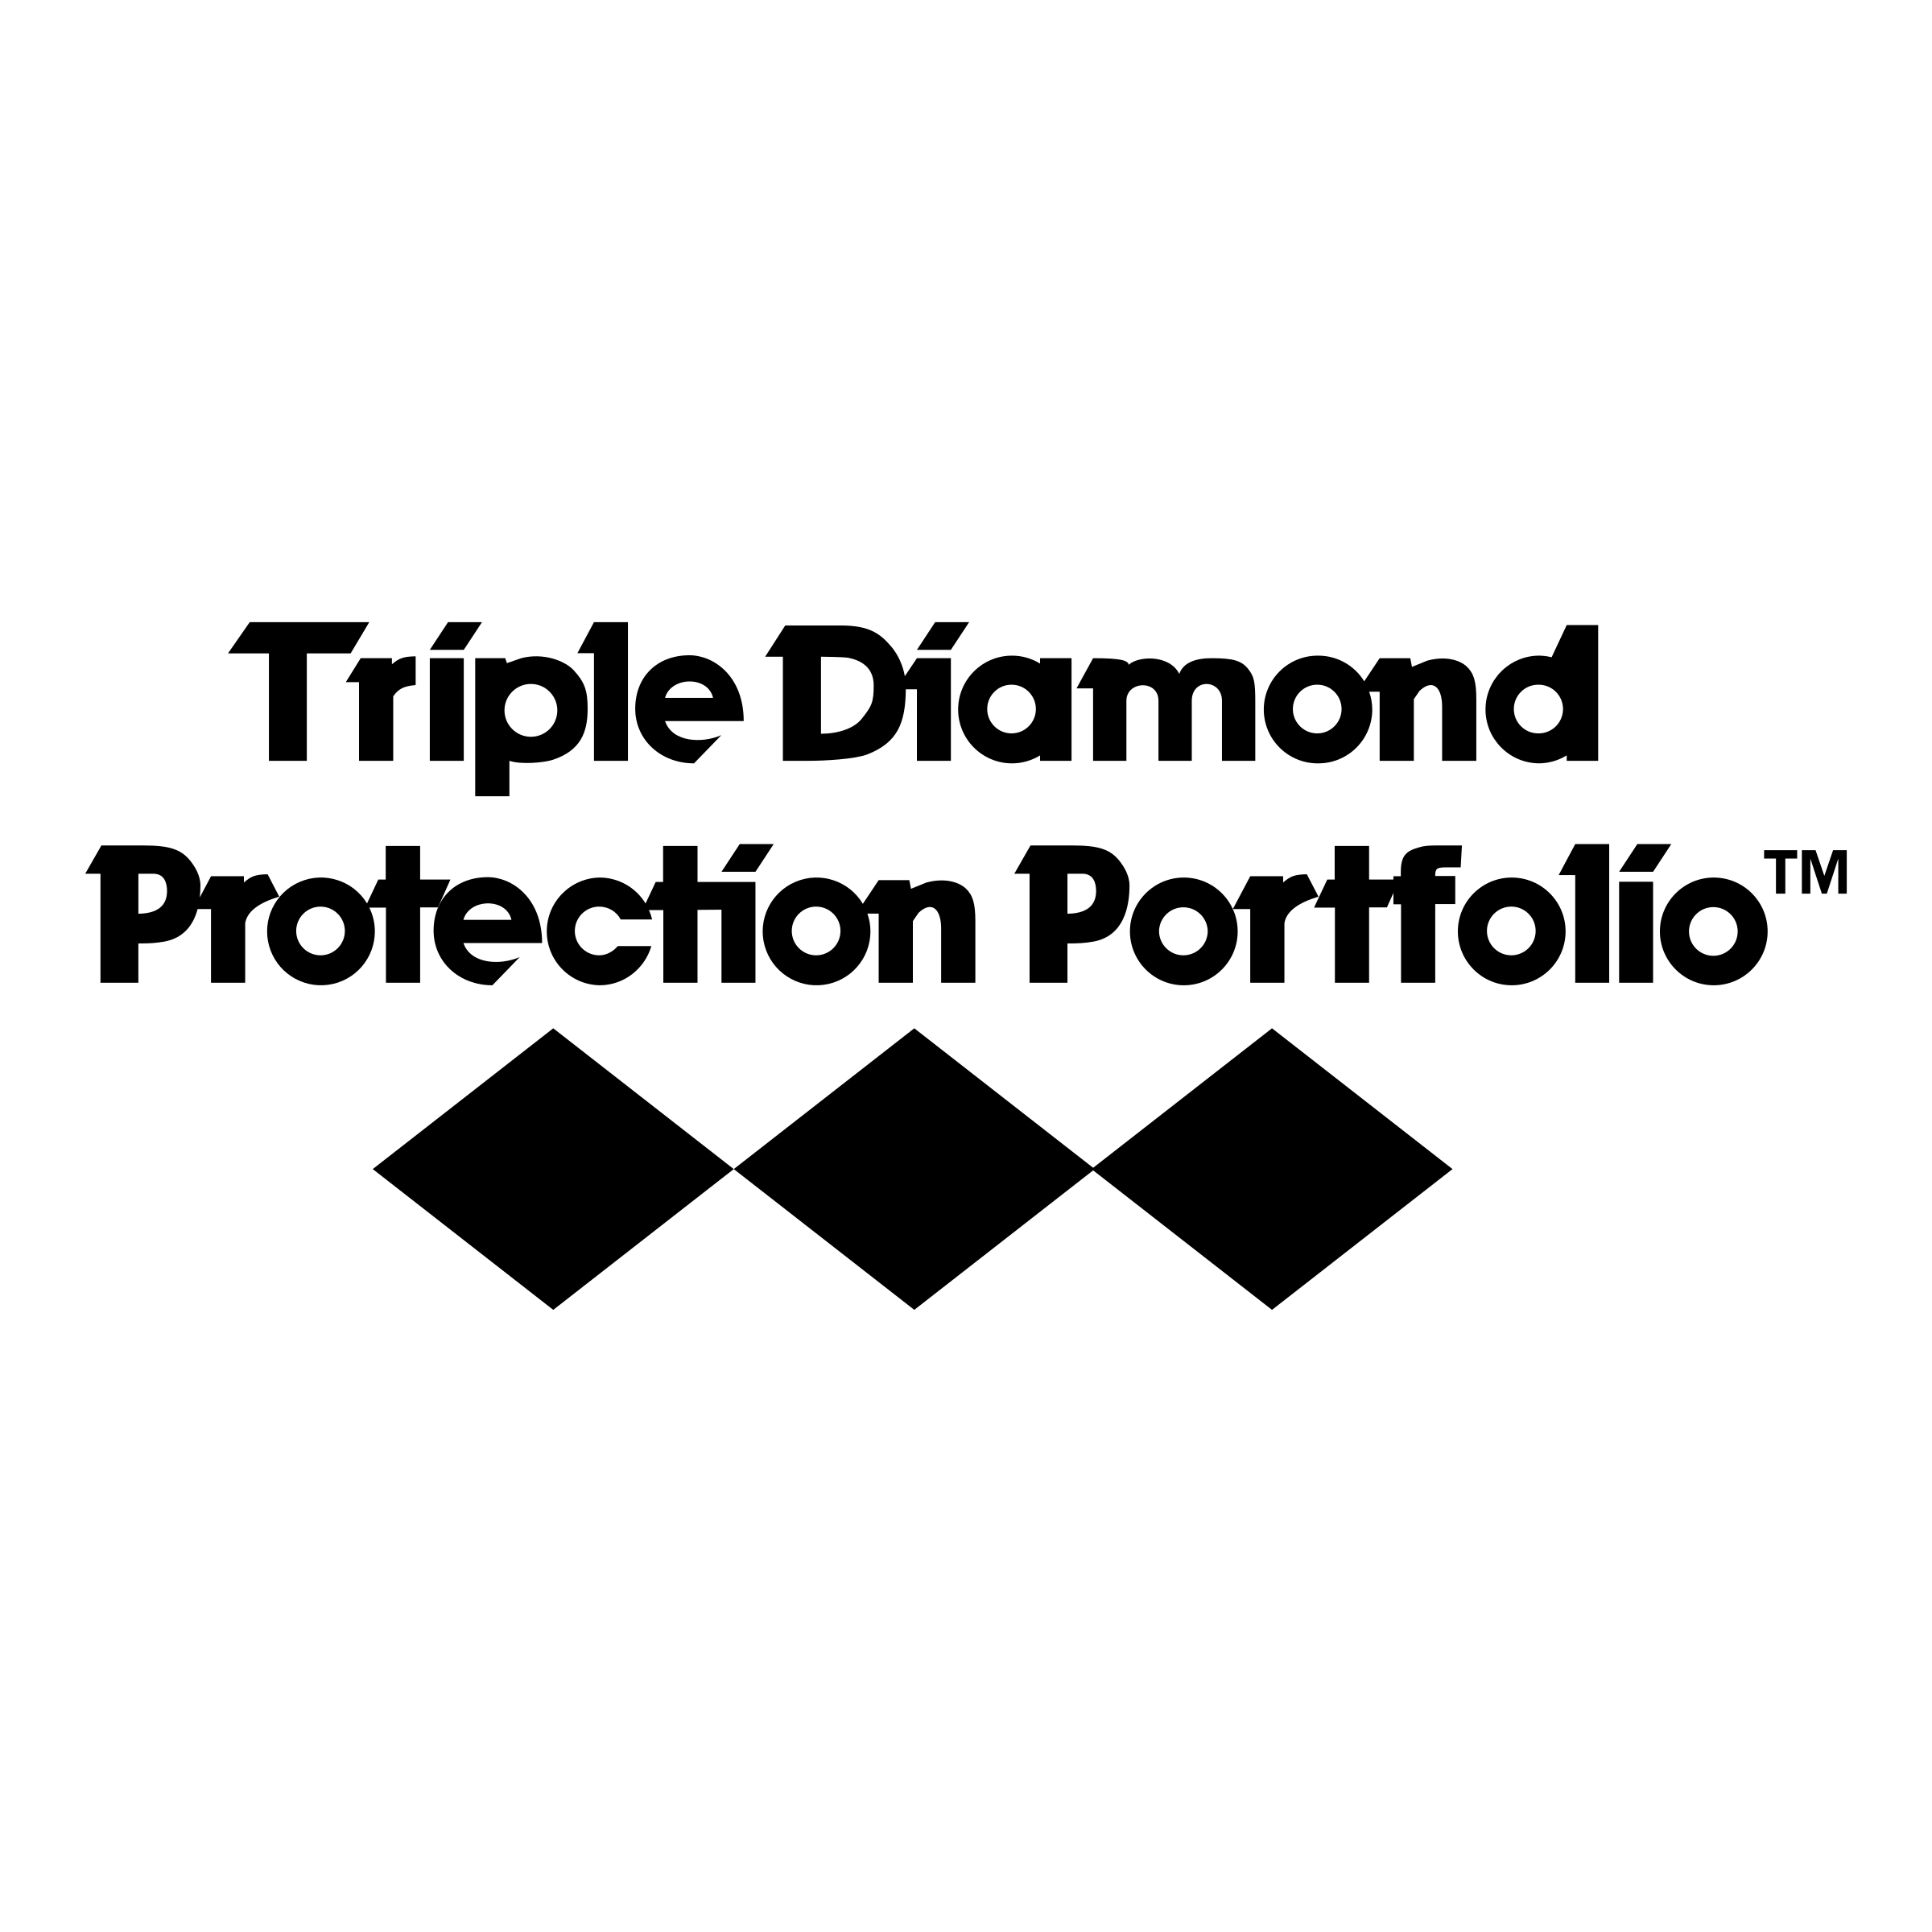 Triple Diamond Logo - Triple Diamond Protection Portfolio Logo PNG Transparent & SVG